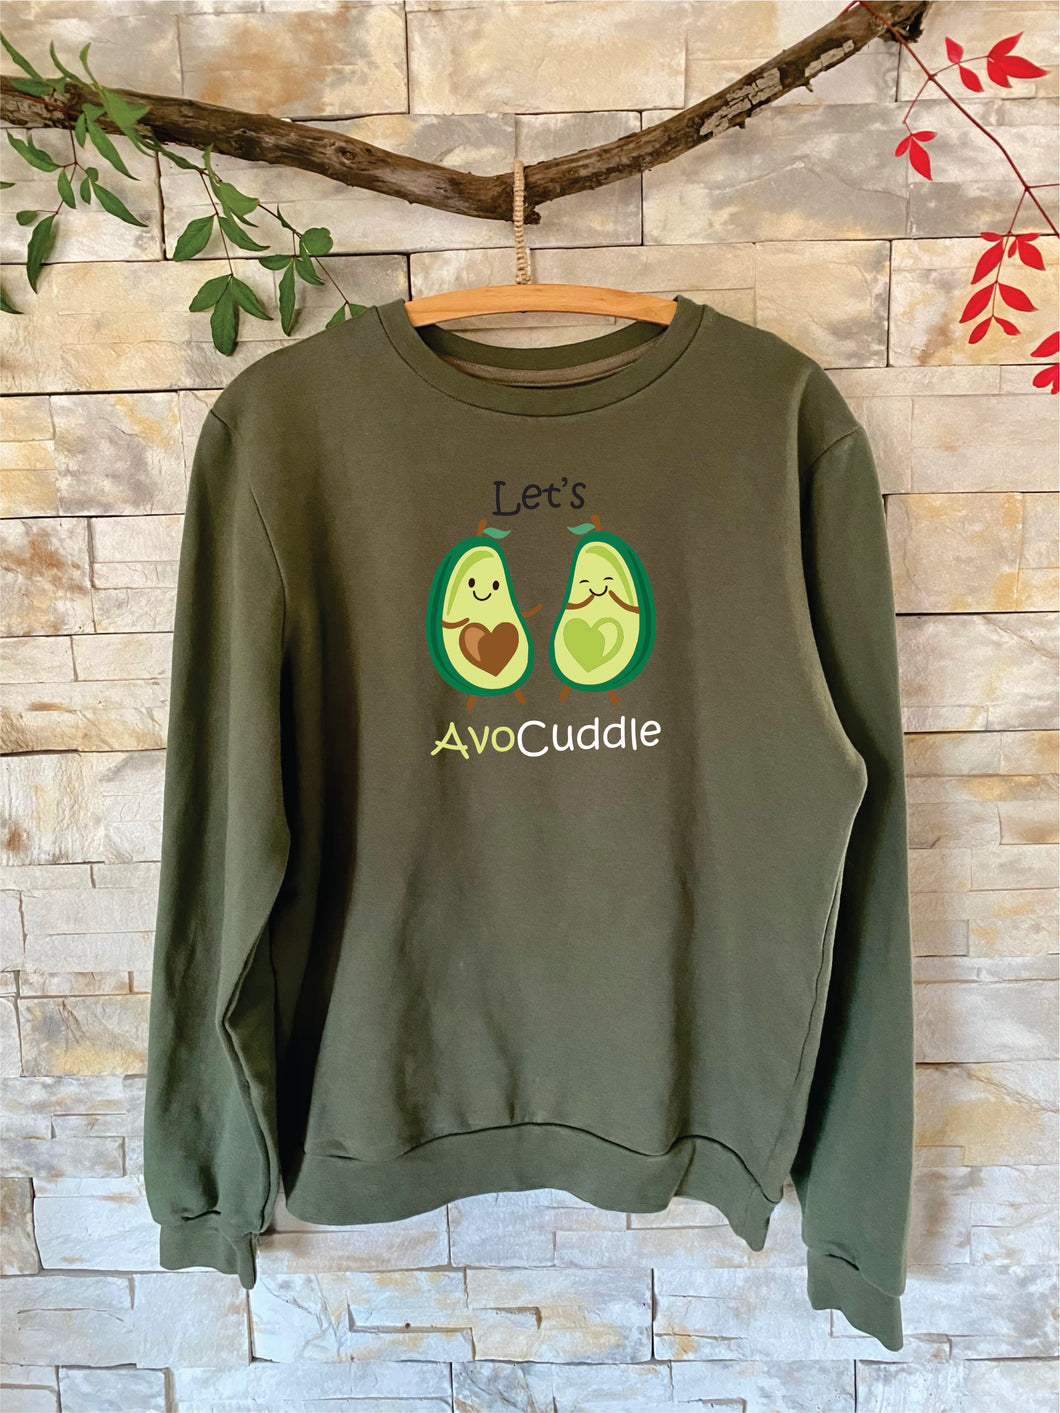 Lets AvoCuddle - Ladies Sweater